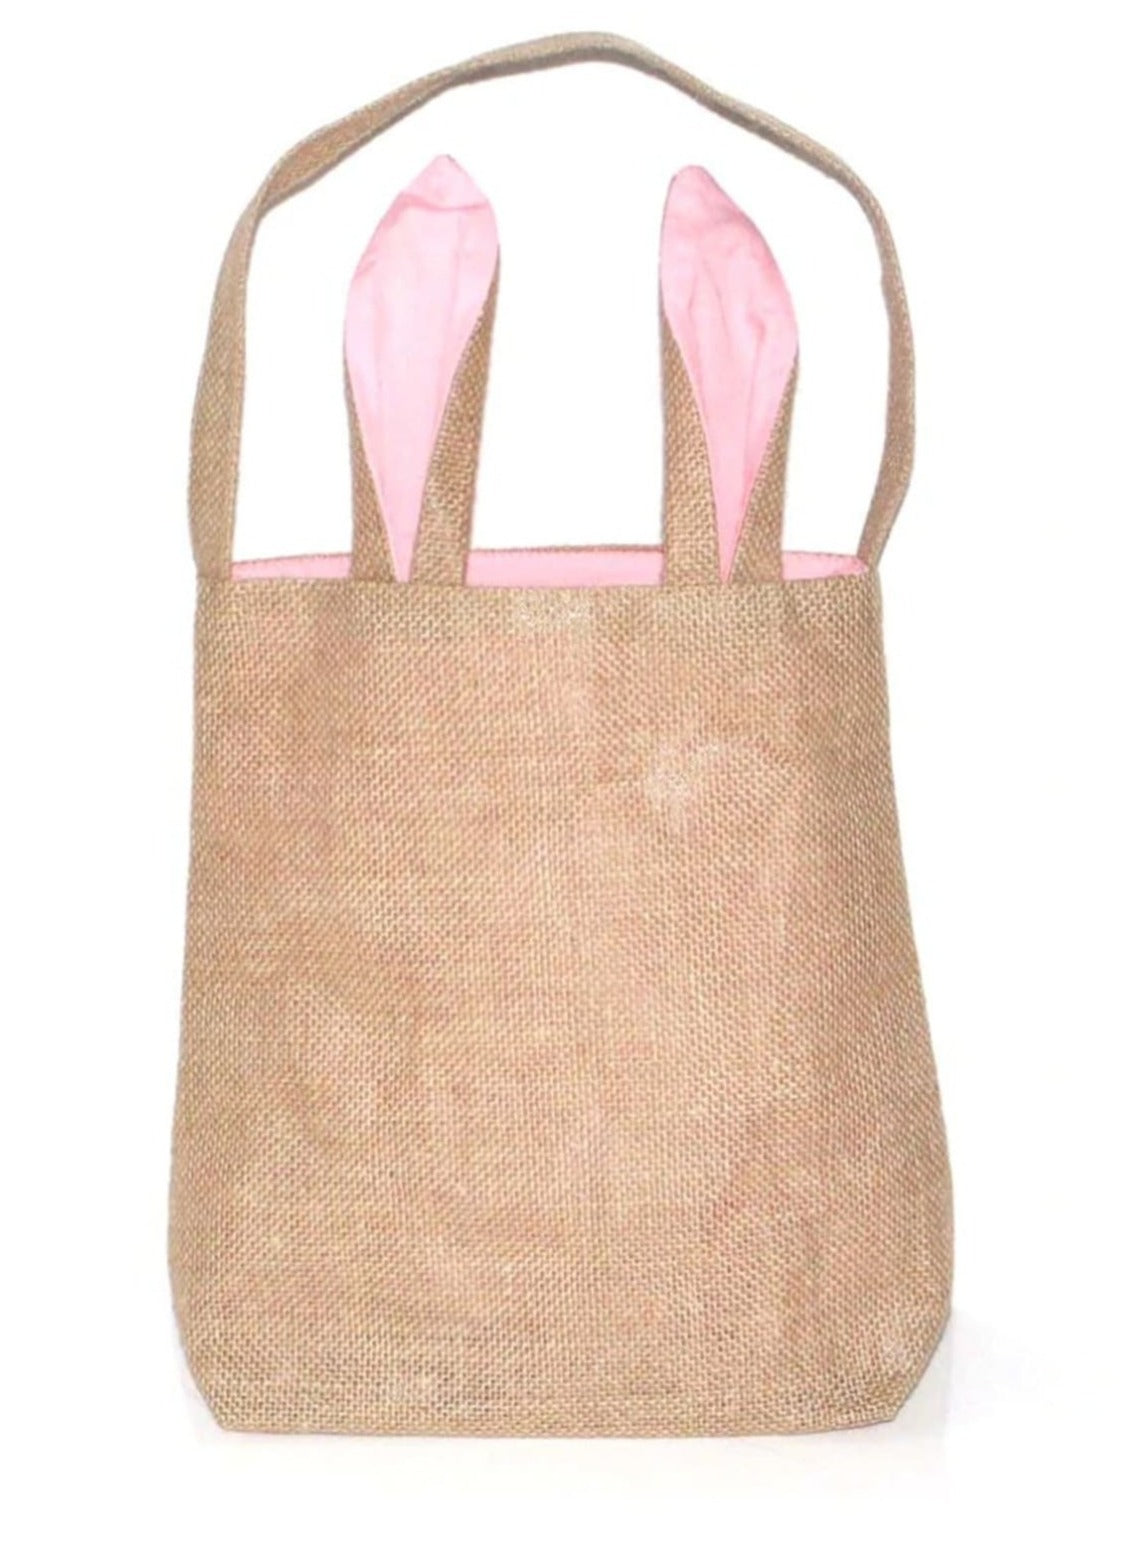 Kids Easter Accessories | Little Girls Rabbit Ears Easter Burlap Bag